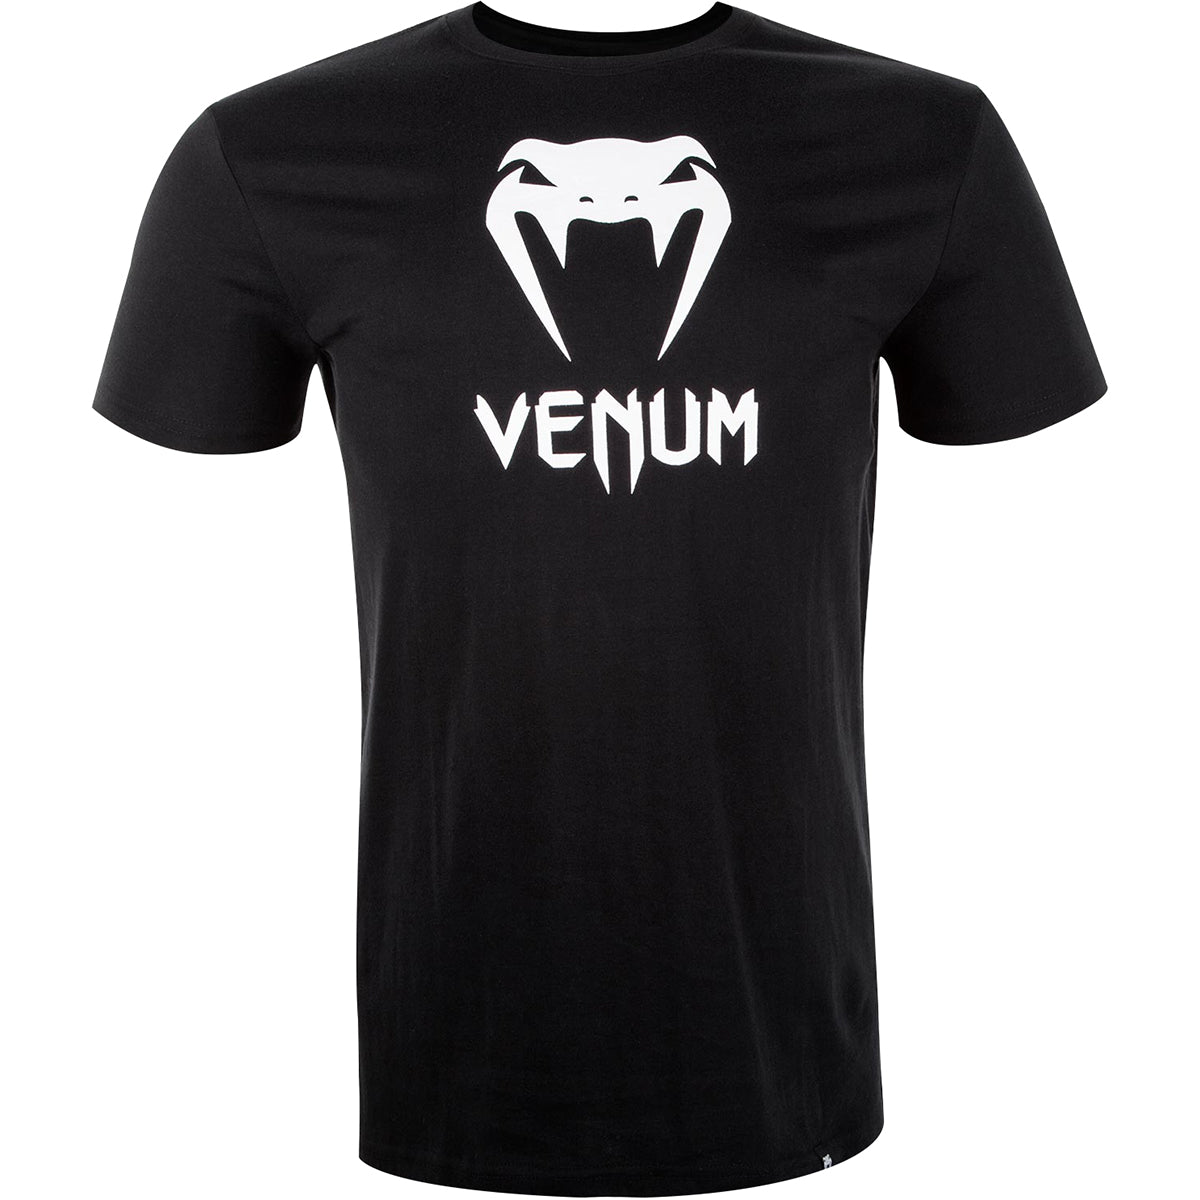 Venum Classic Short Sleeve T-Shirt - Black Venum